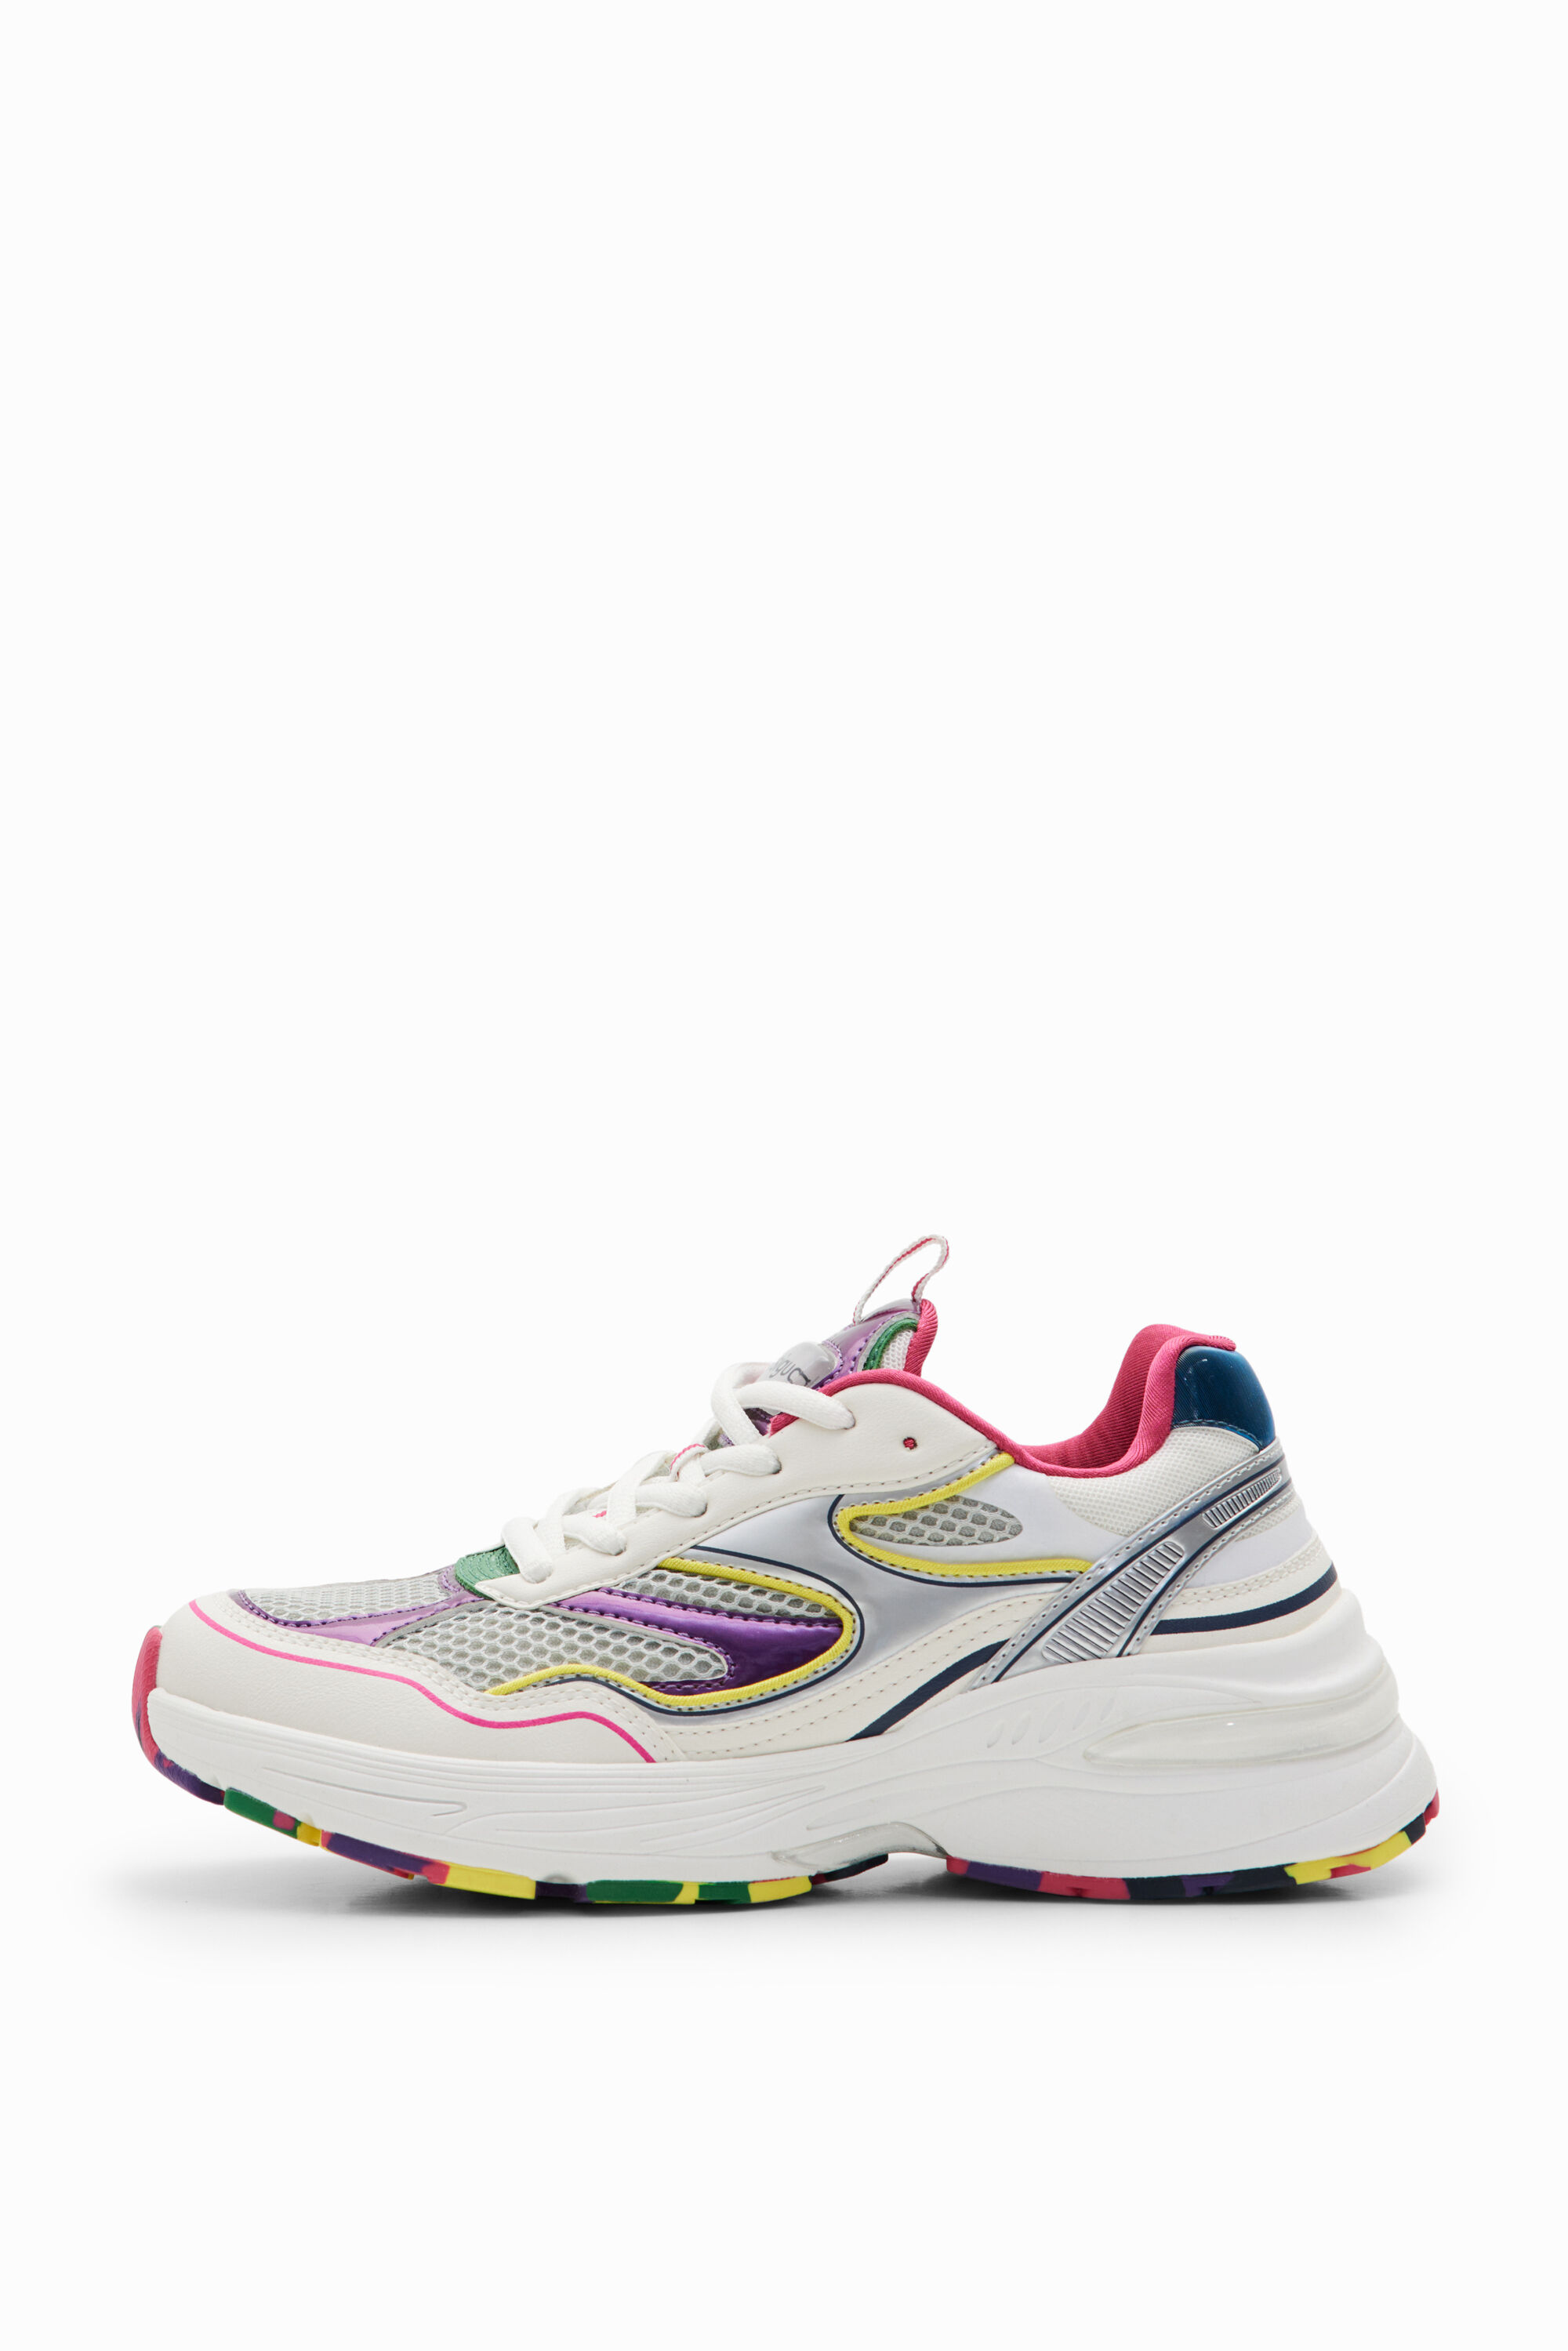 Desigual Multicolour Running Sneakers In White